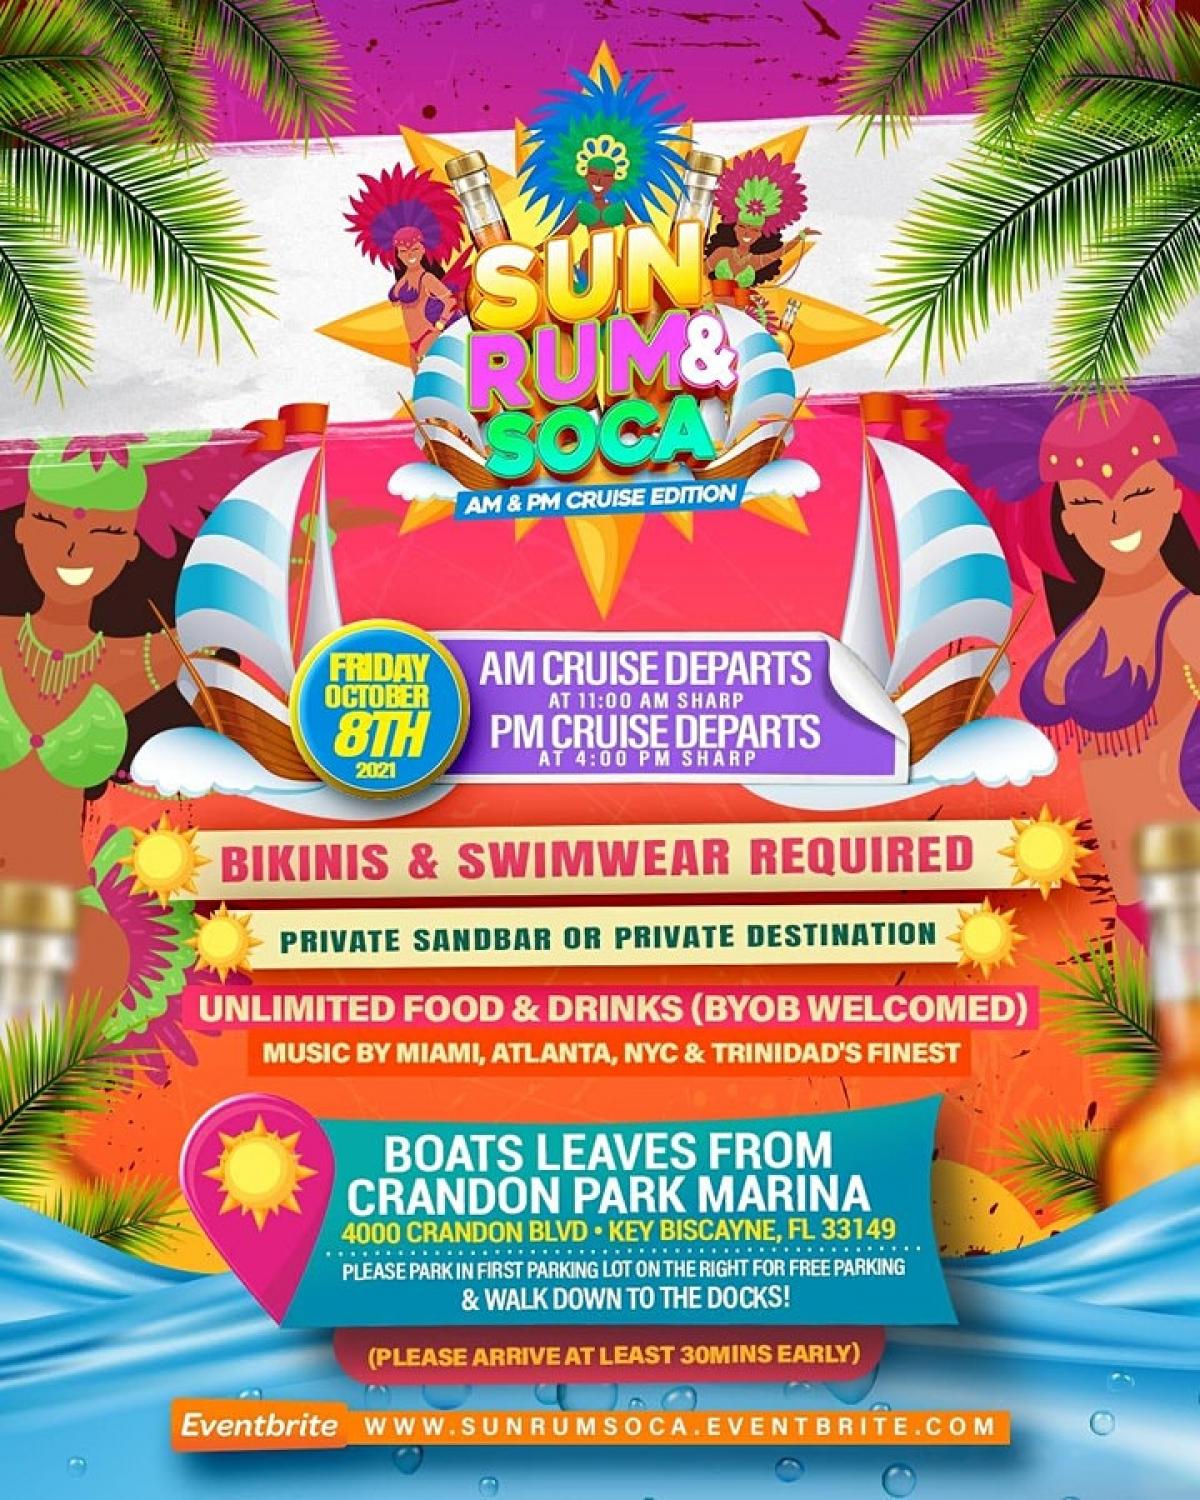 Sun Rum & Soca Cruise 2021 flyer or graphic.